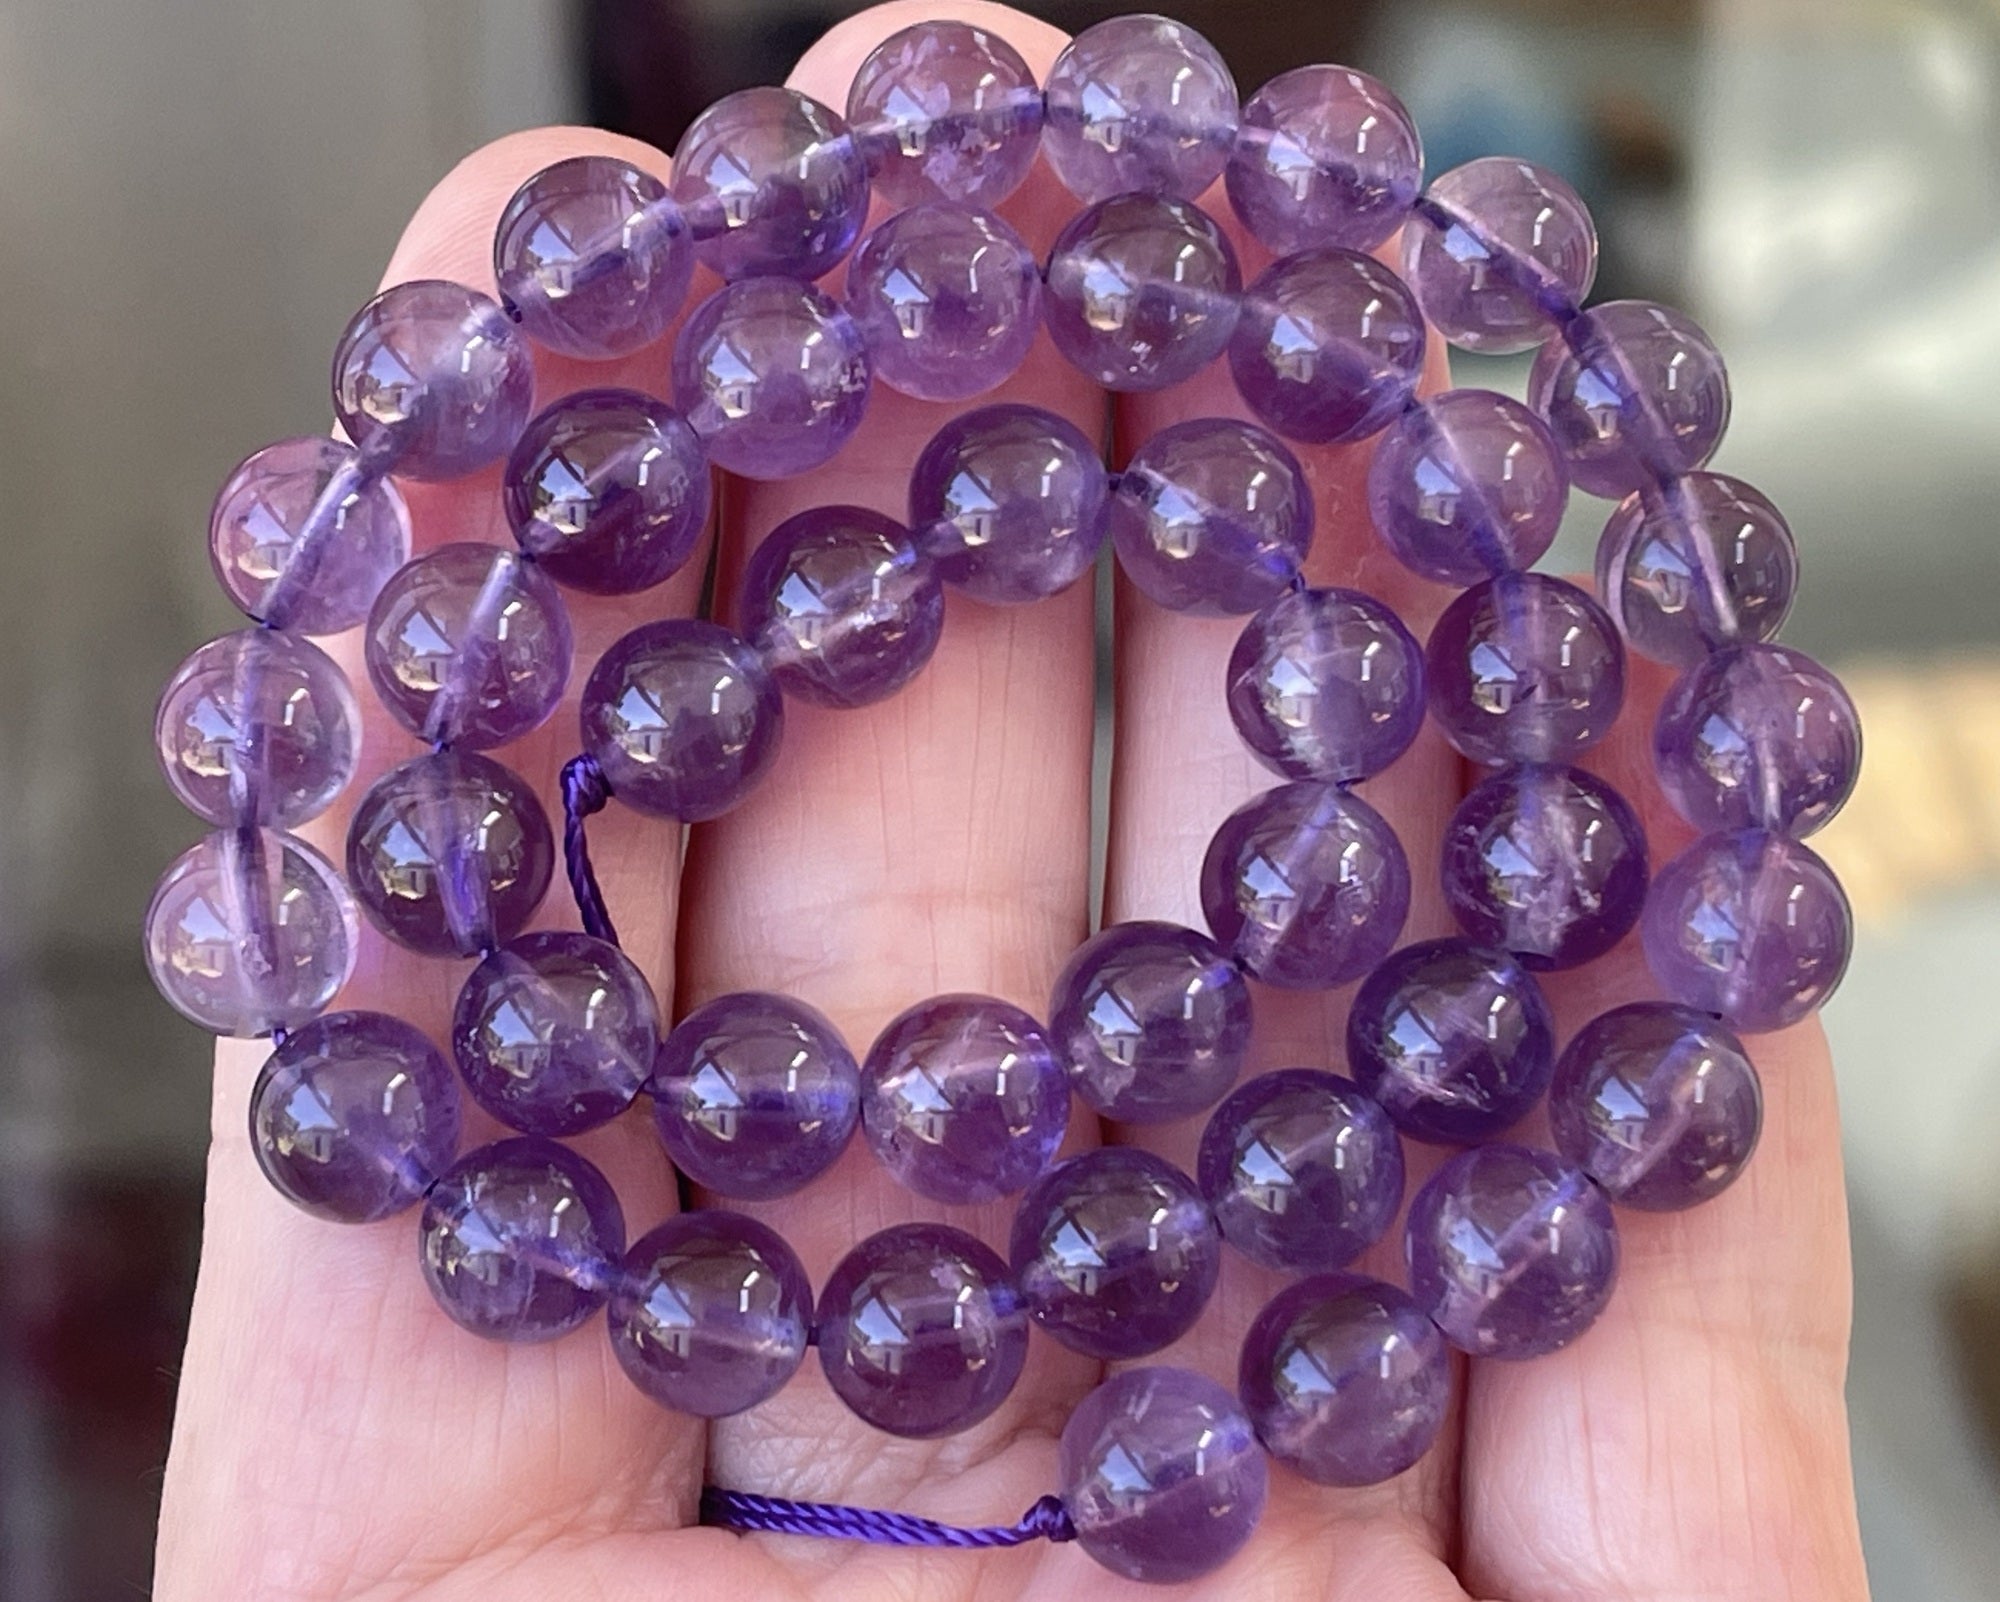 Amethyst 8mm round natural gemstone beads 15" strand